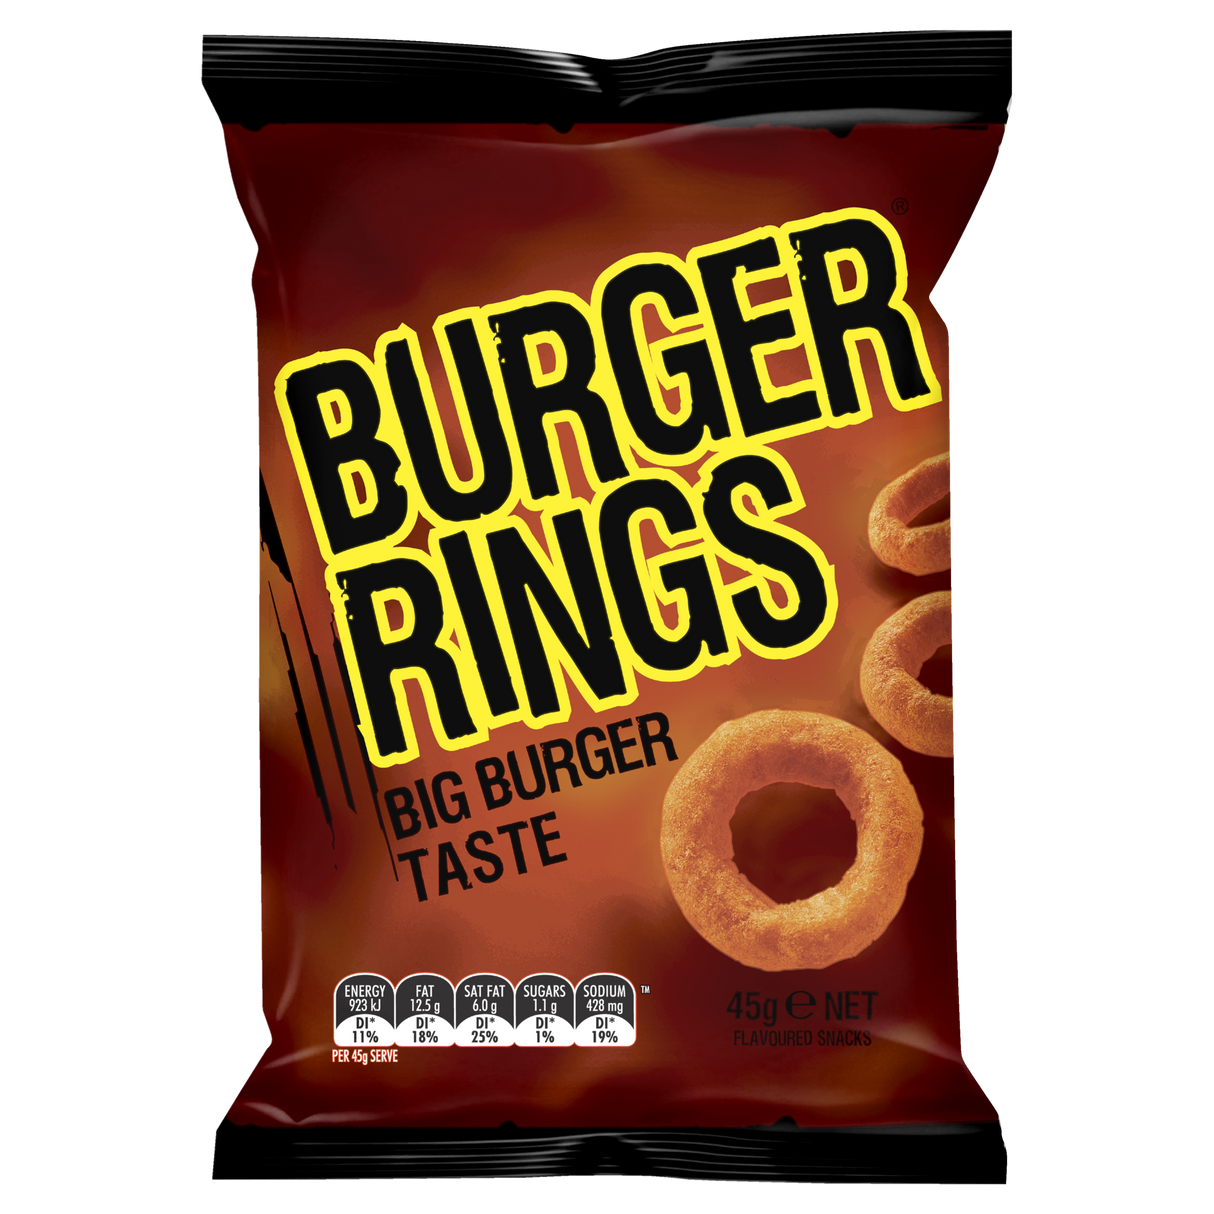 Burger Rings Big Burger Taste 45g